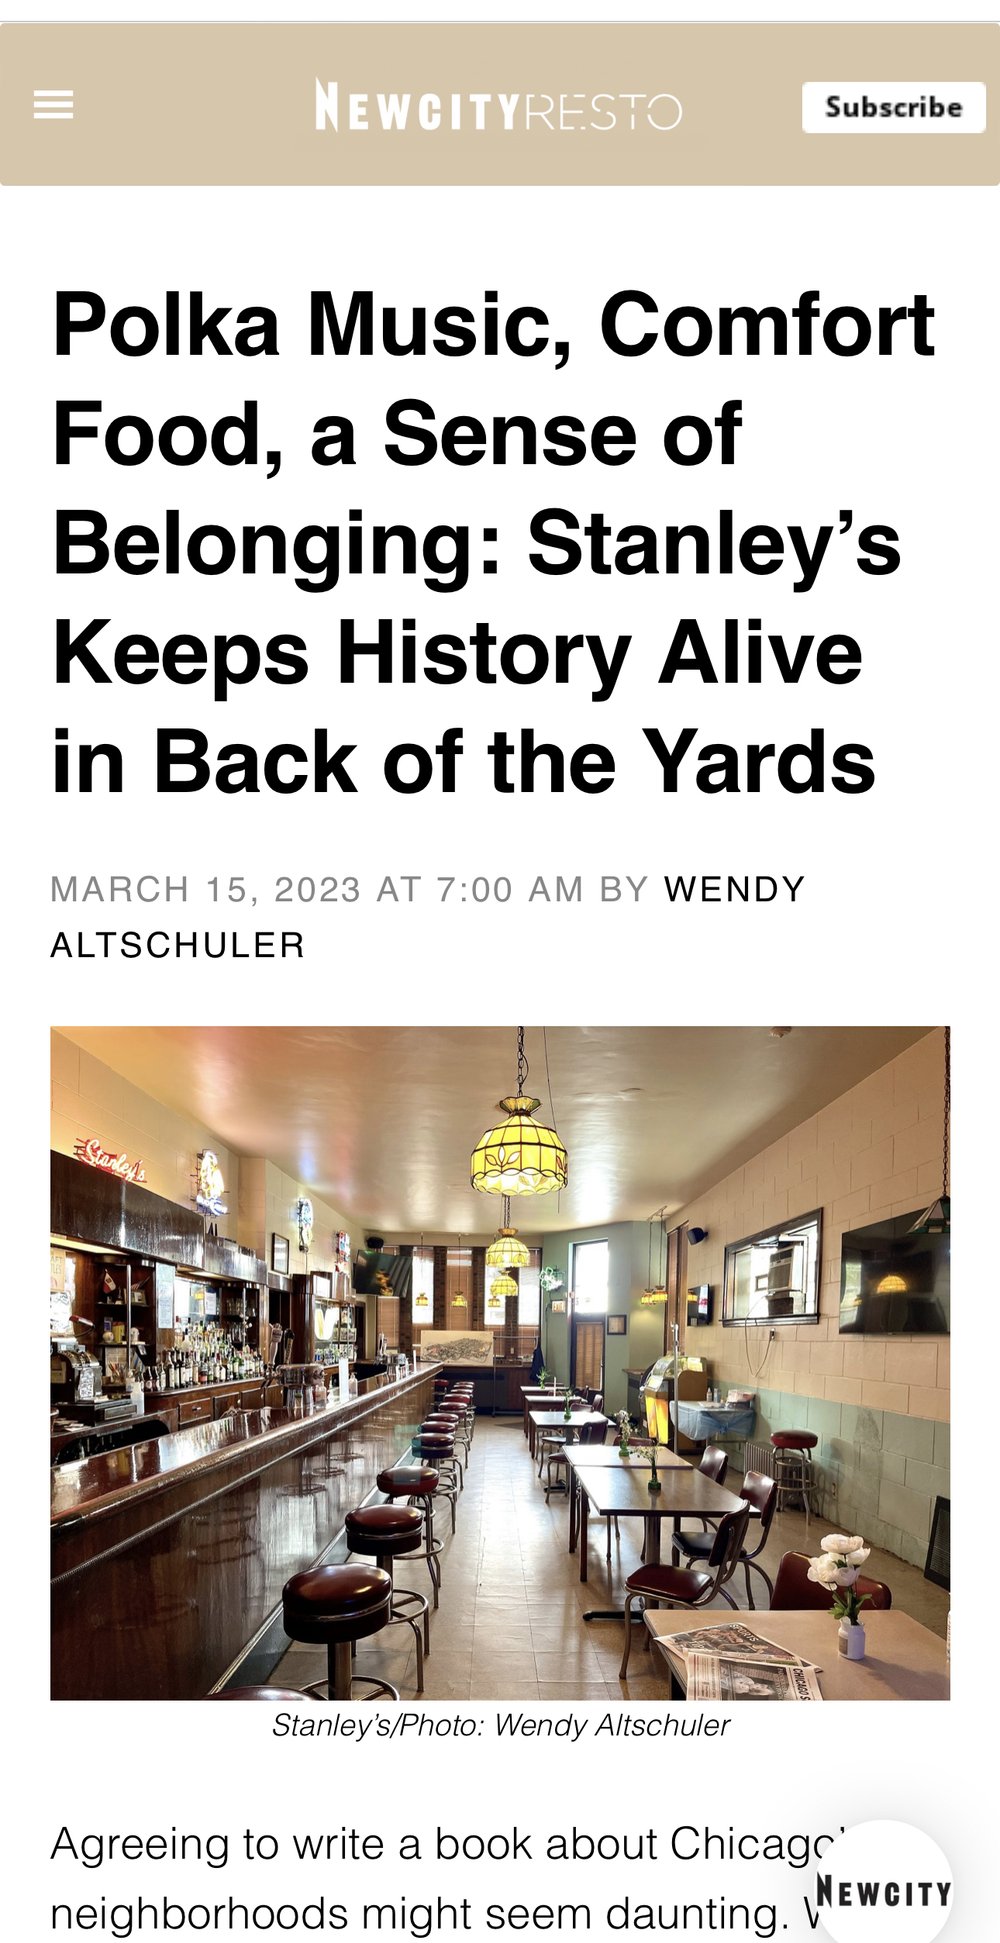 Polka Music, Comfort Food, a Sense of Belonging: Stanley’s Keeps History Alive in Back of the Yards